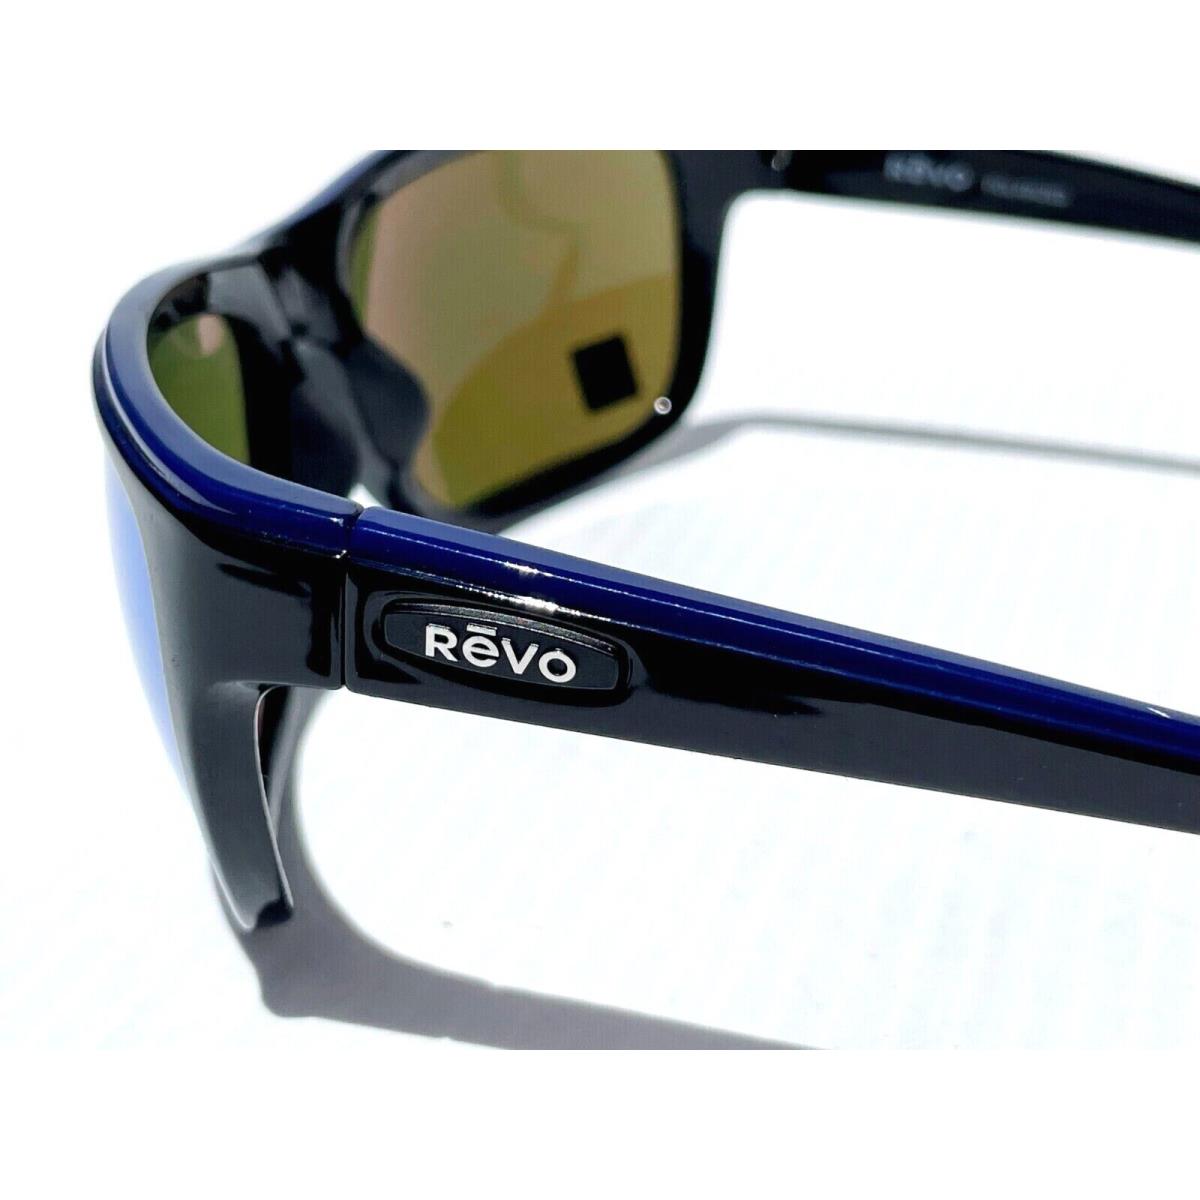 Revo sunglasses Enzo - Black Blue Frame, Blue Lens